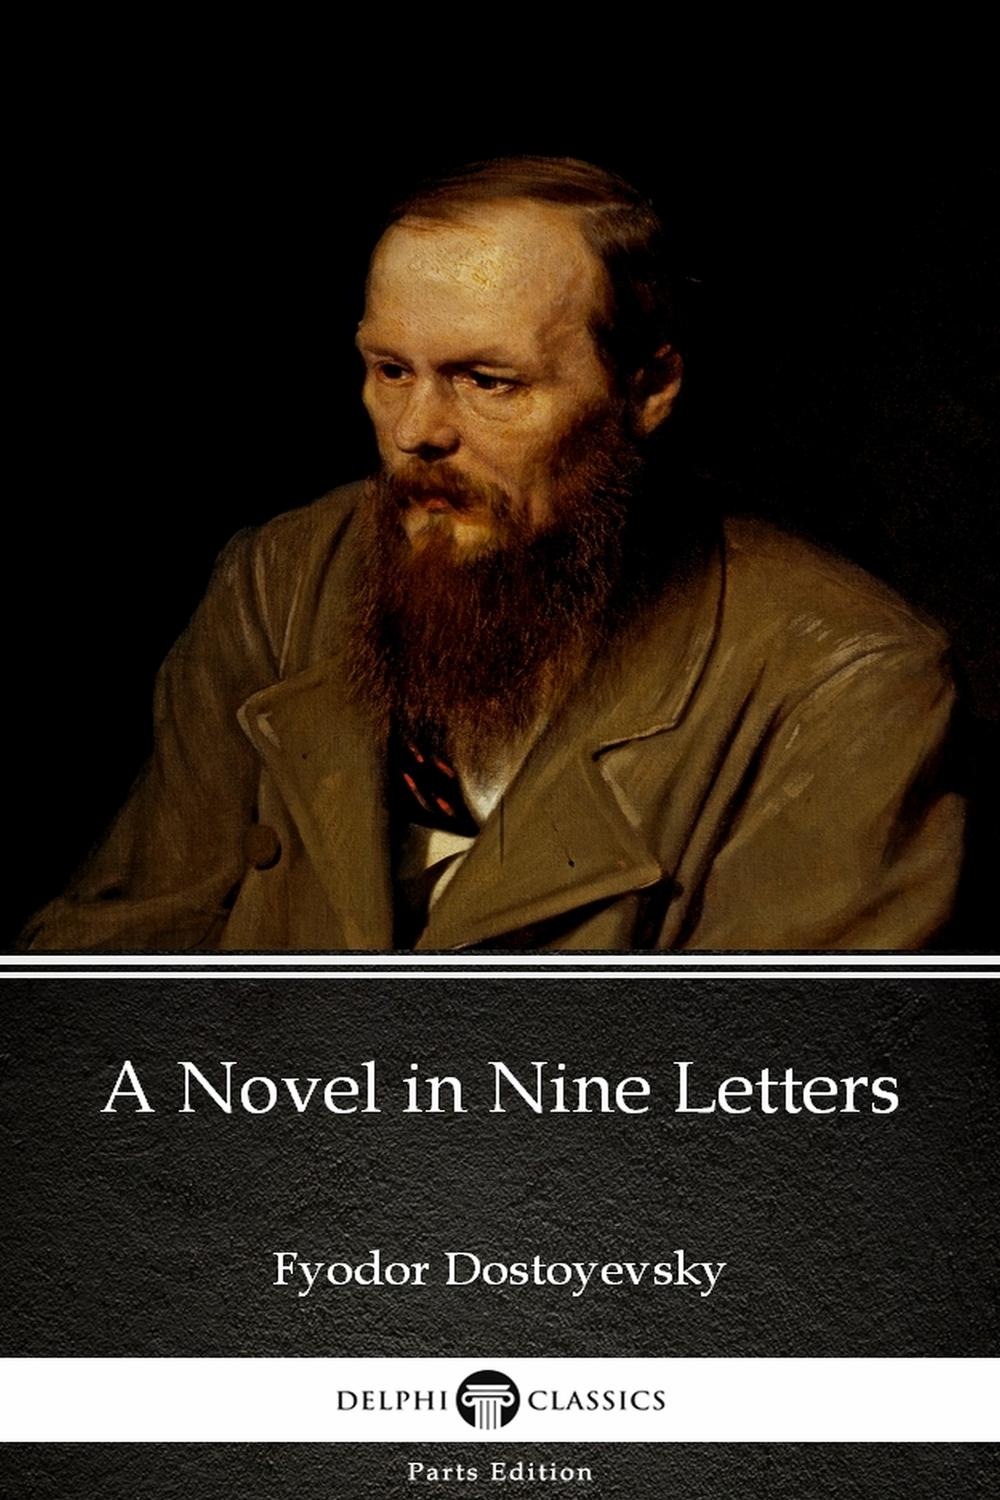 A Novel in Nine Letters by Fyodor Dostoyevsky - Fyodor Dostoyevsky